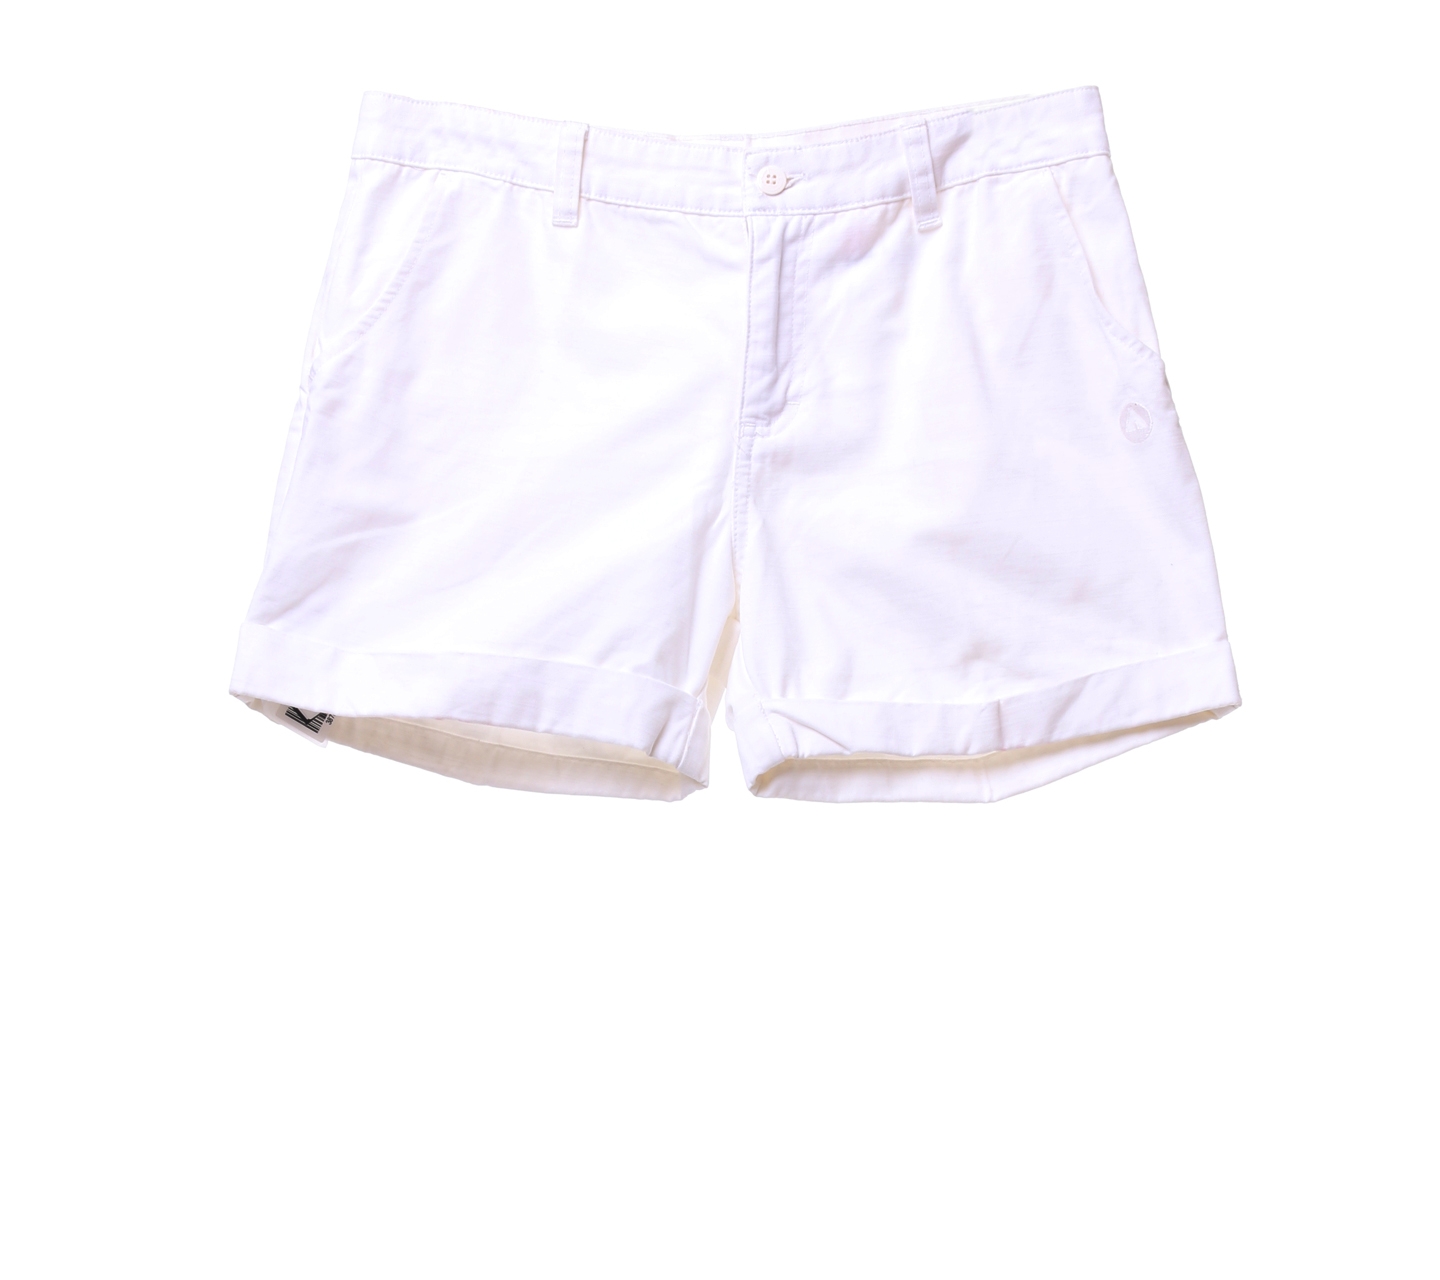 Airwalk White Short Pants